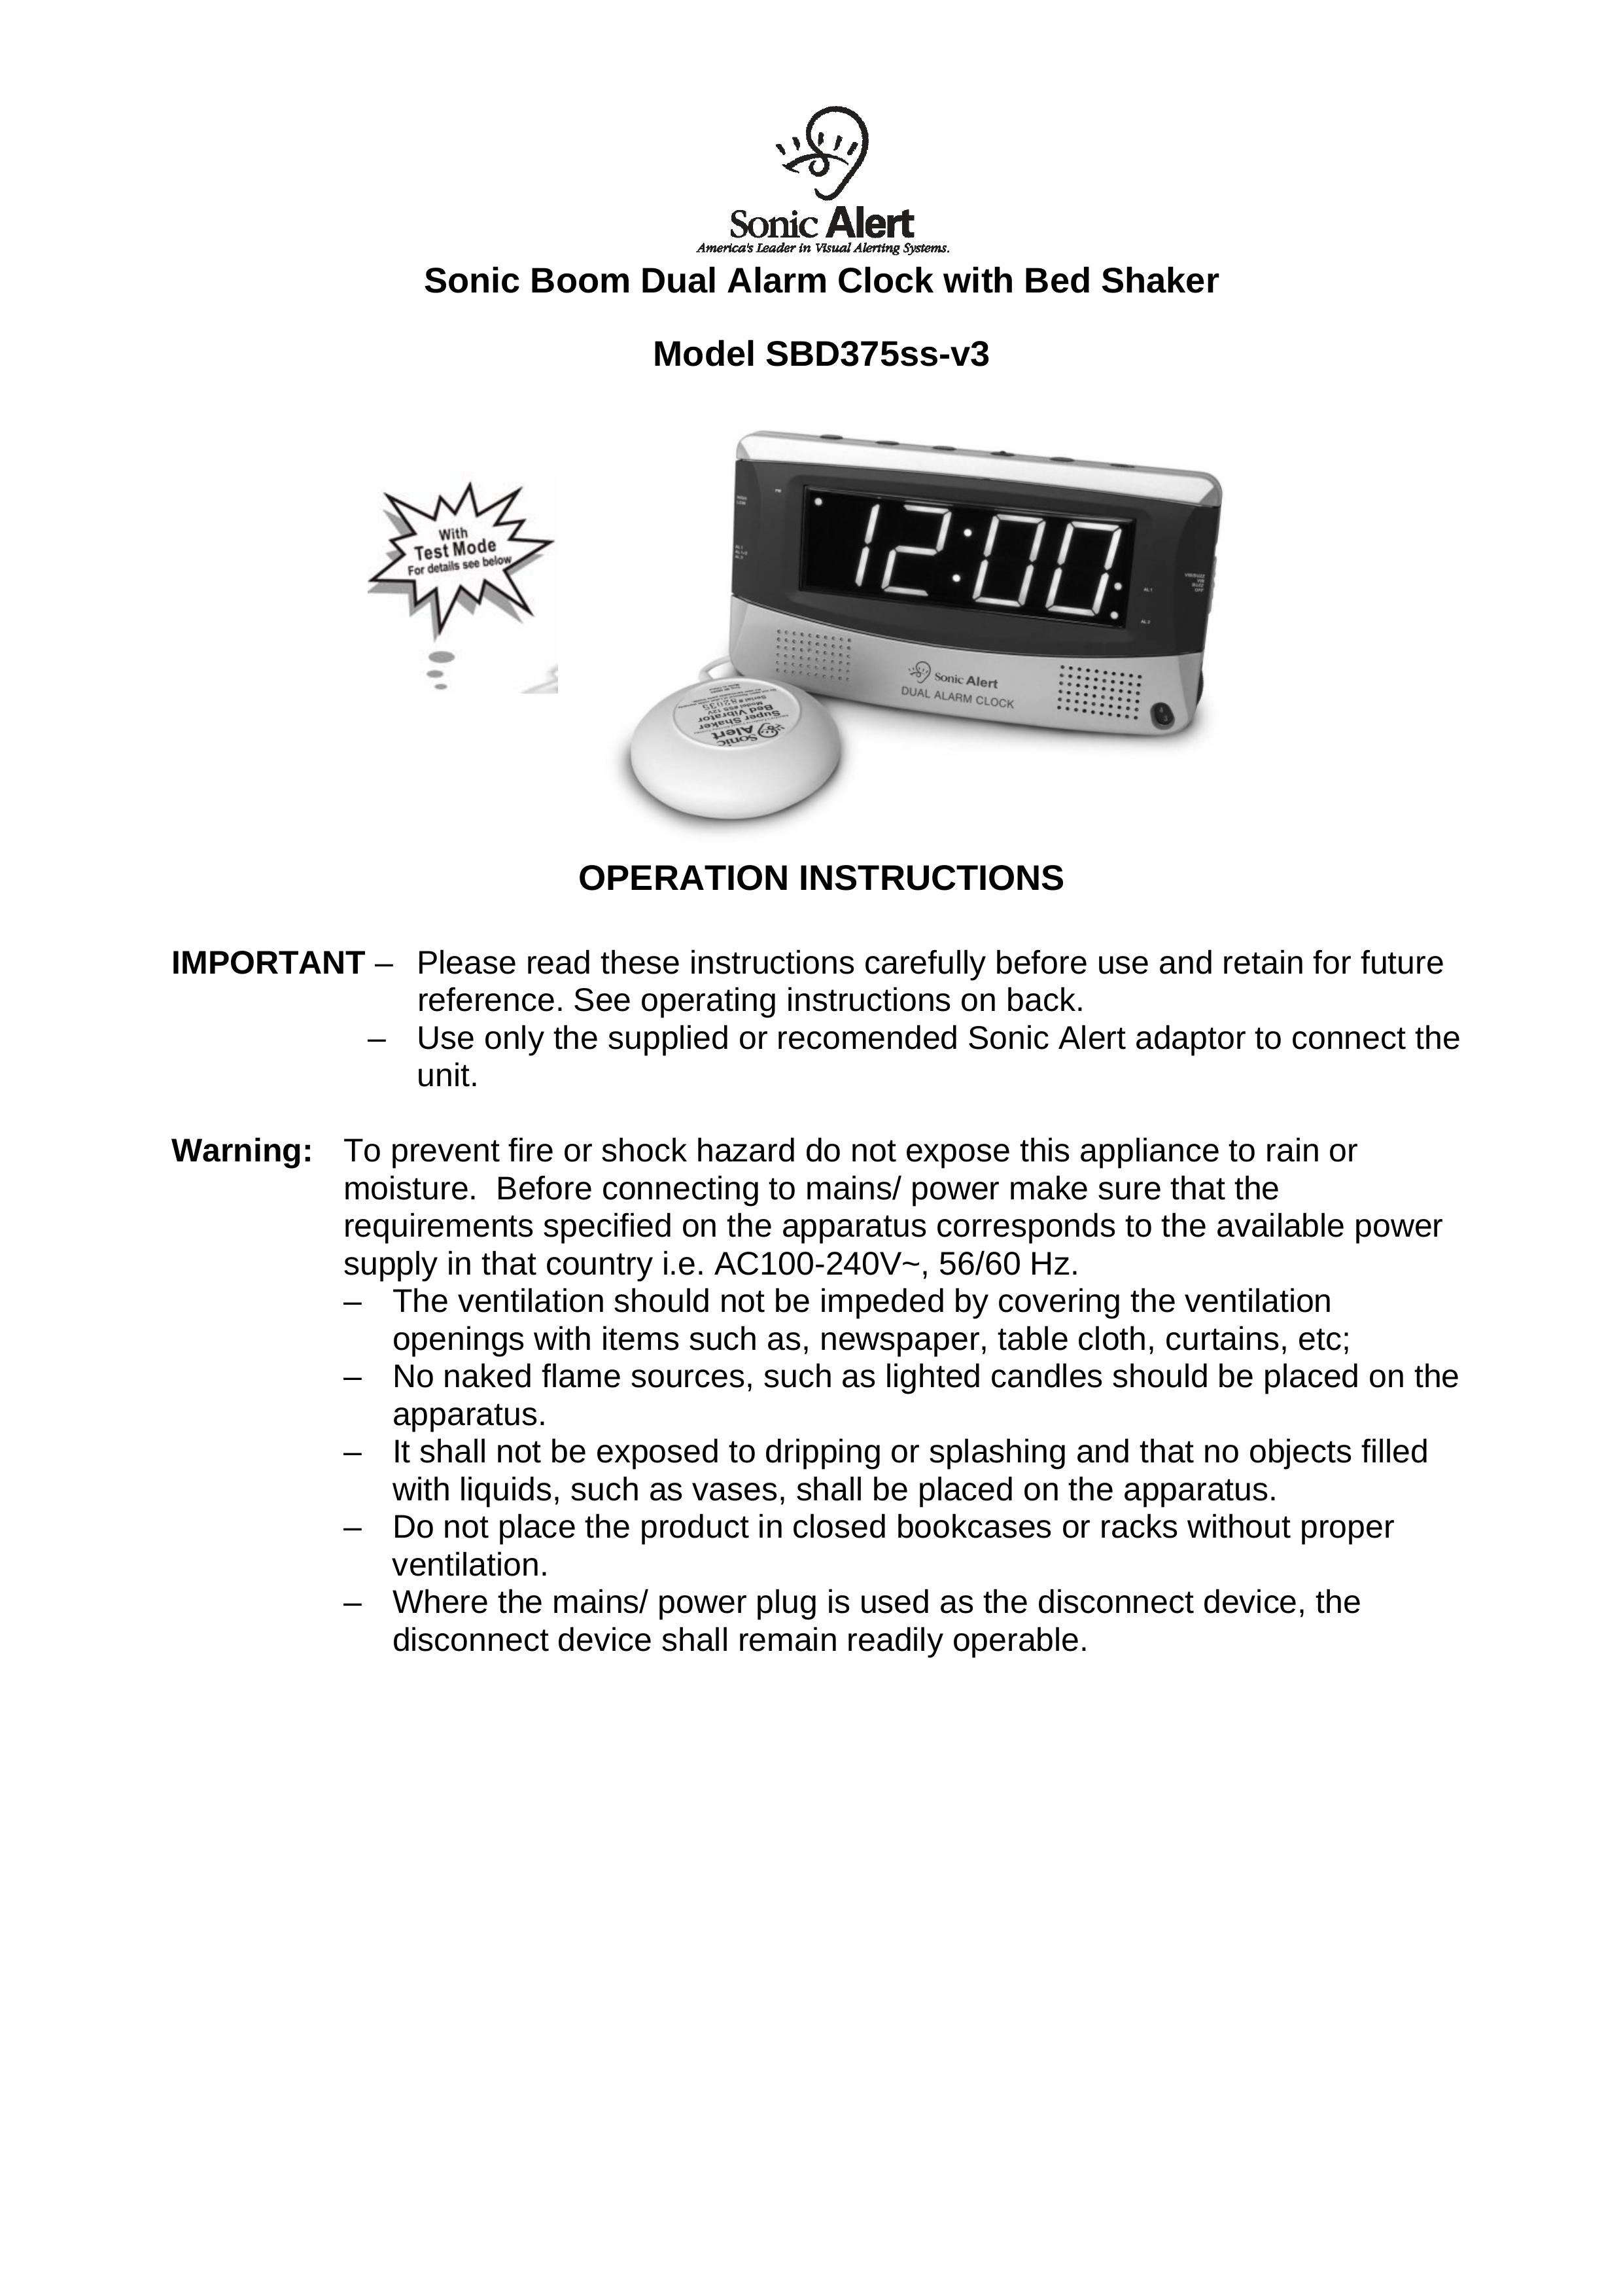 Sonic Alert SBD375ss-v3 Clock Radio User Manual